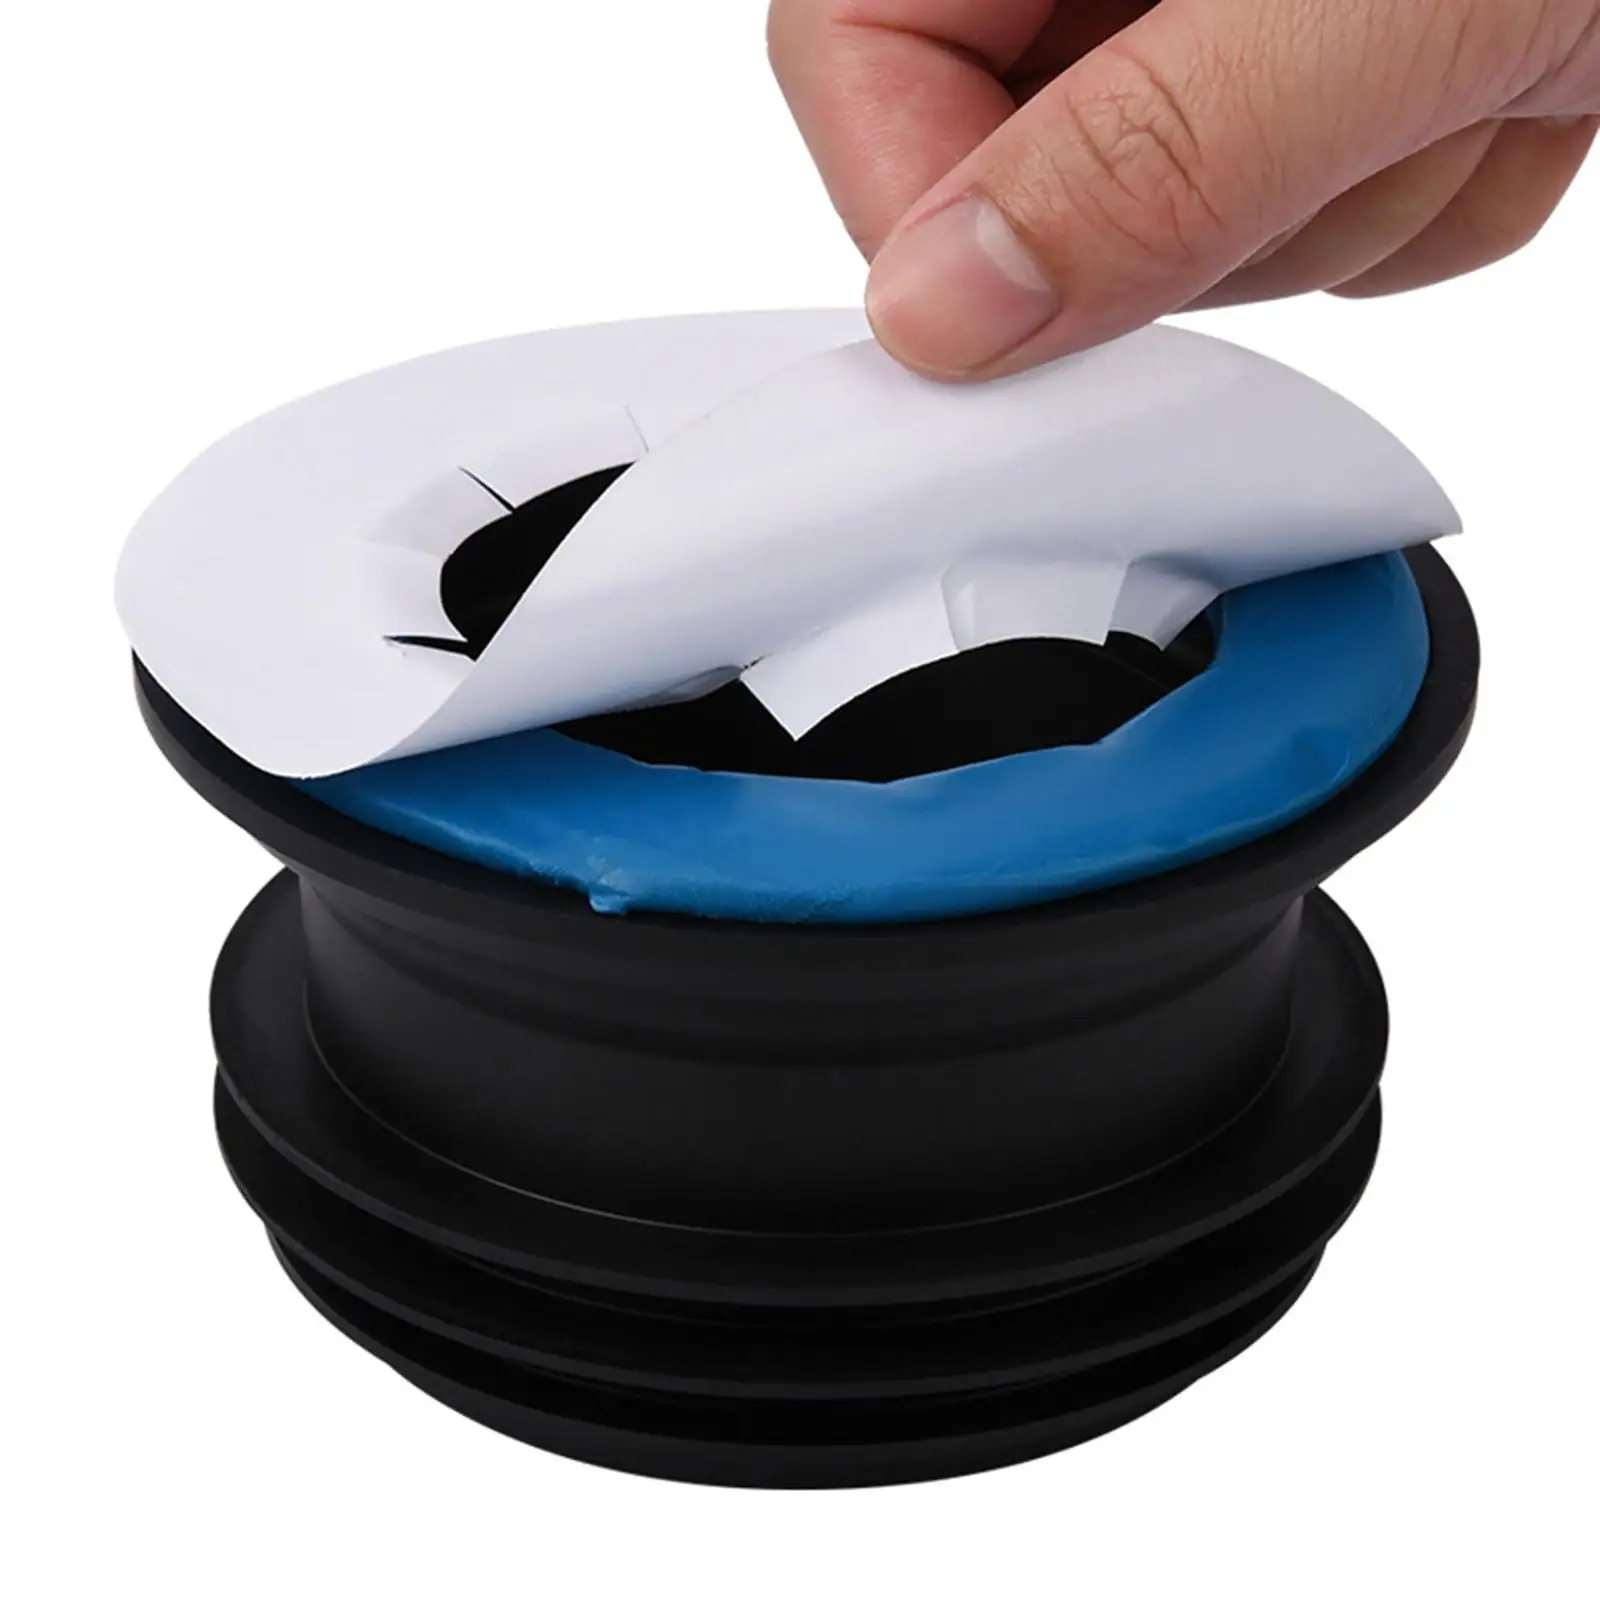 Universal Toilet Rubber Ring Deodorant Thickened Drain Pipe Bowl Gasket Seal Leakproof Easy Install Sealing Ring Repair Kits